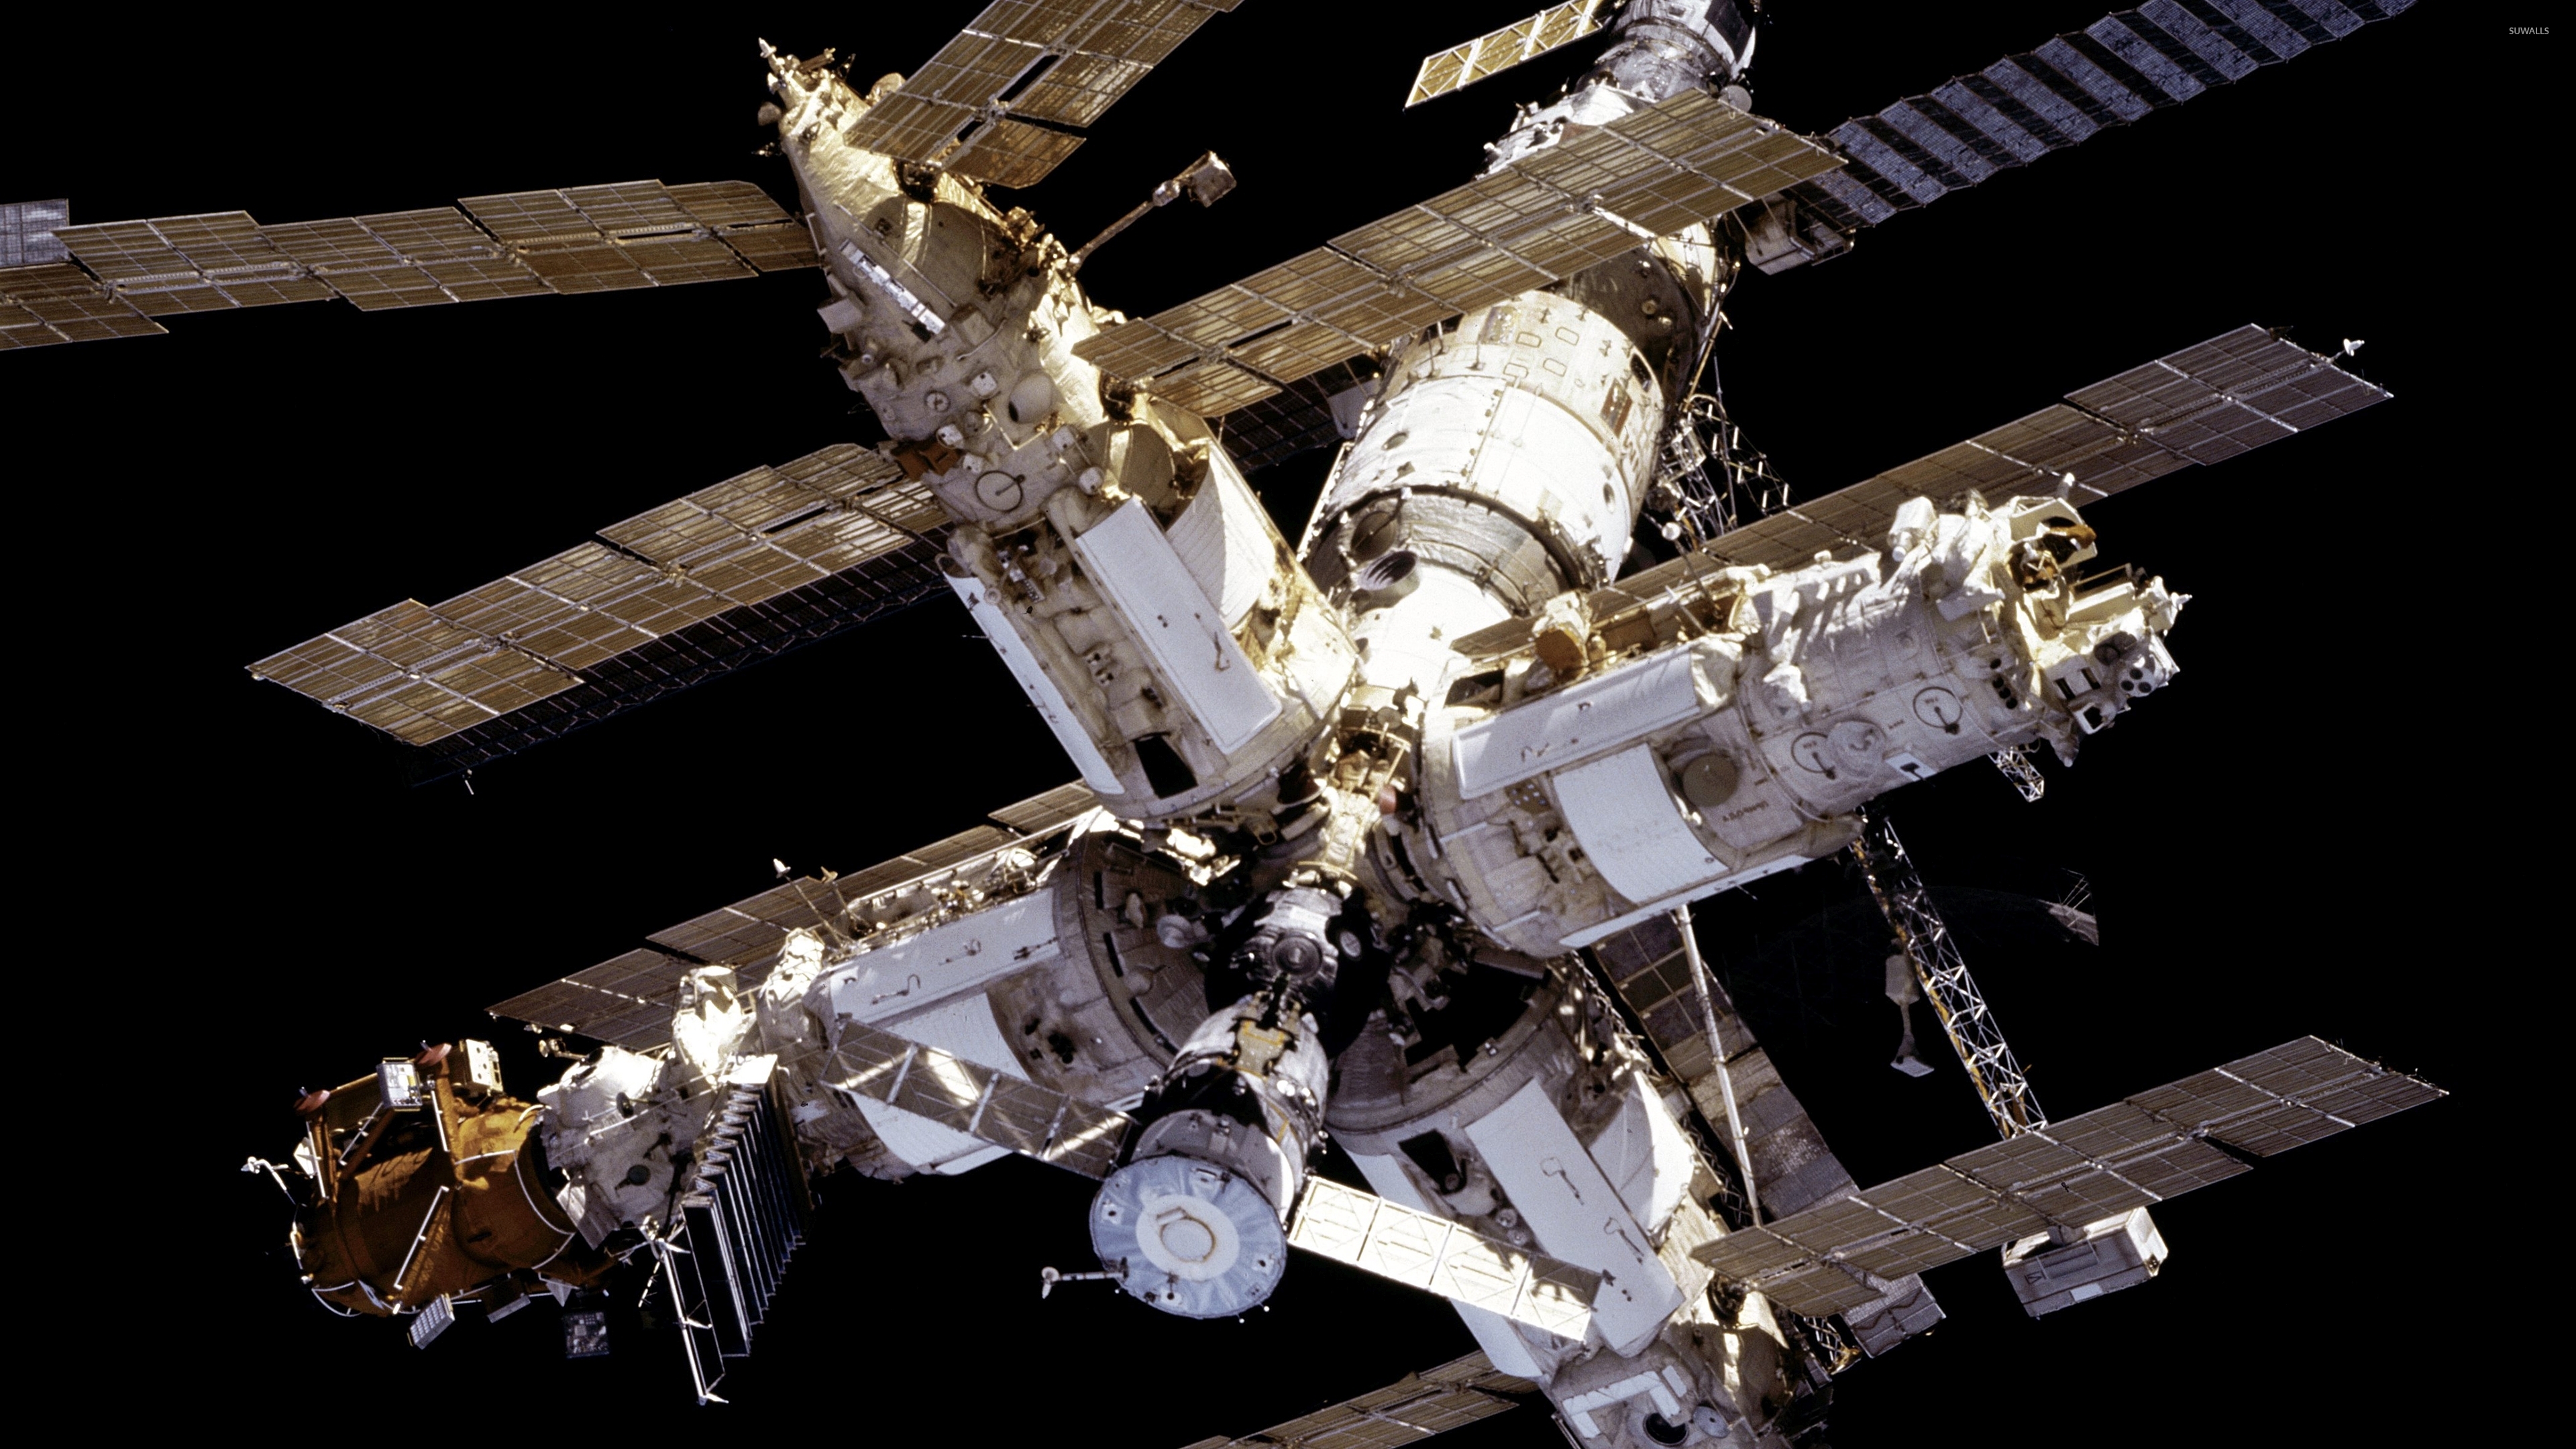 Mir org. Станция мир 1986. 1986 Запущена Советская орбитальная станция «мир». Запуск космической орбитальной станции «мир». Космическая станция «мир» (20.02.1986-16.03.2001).